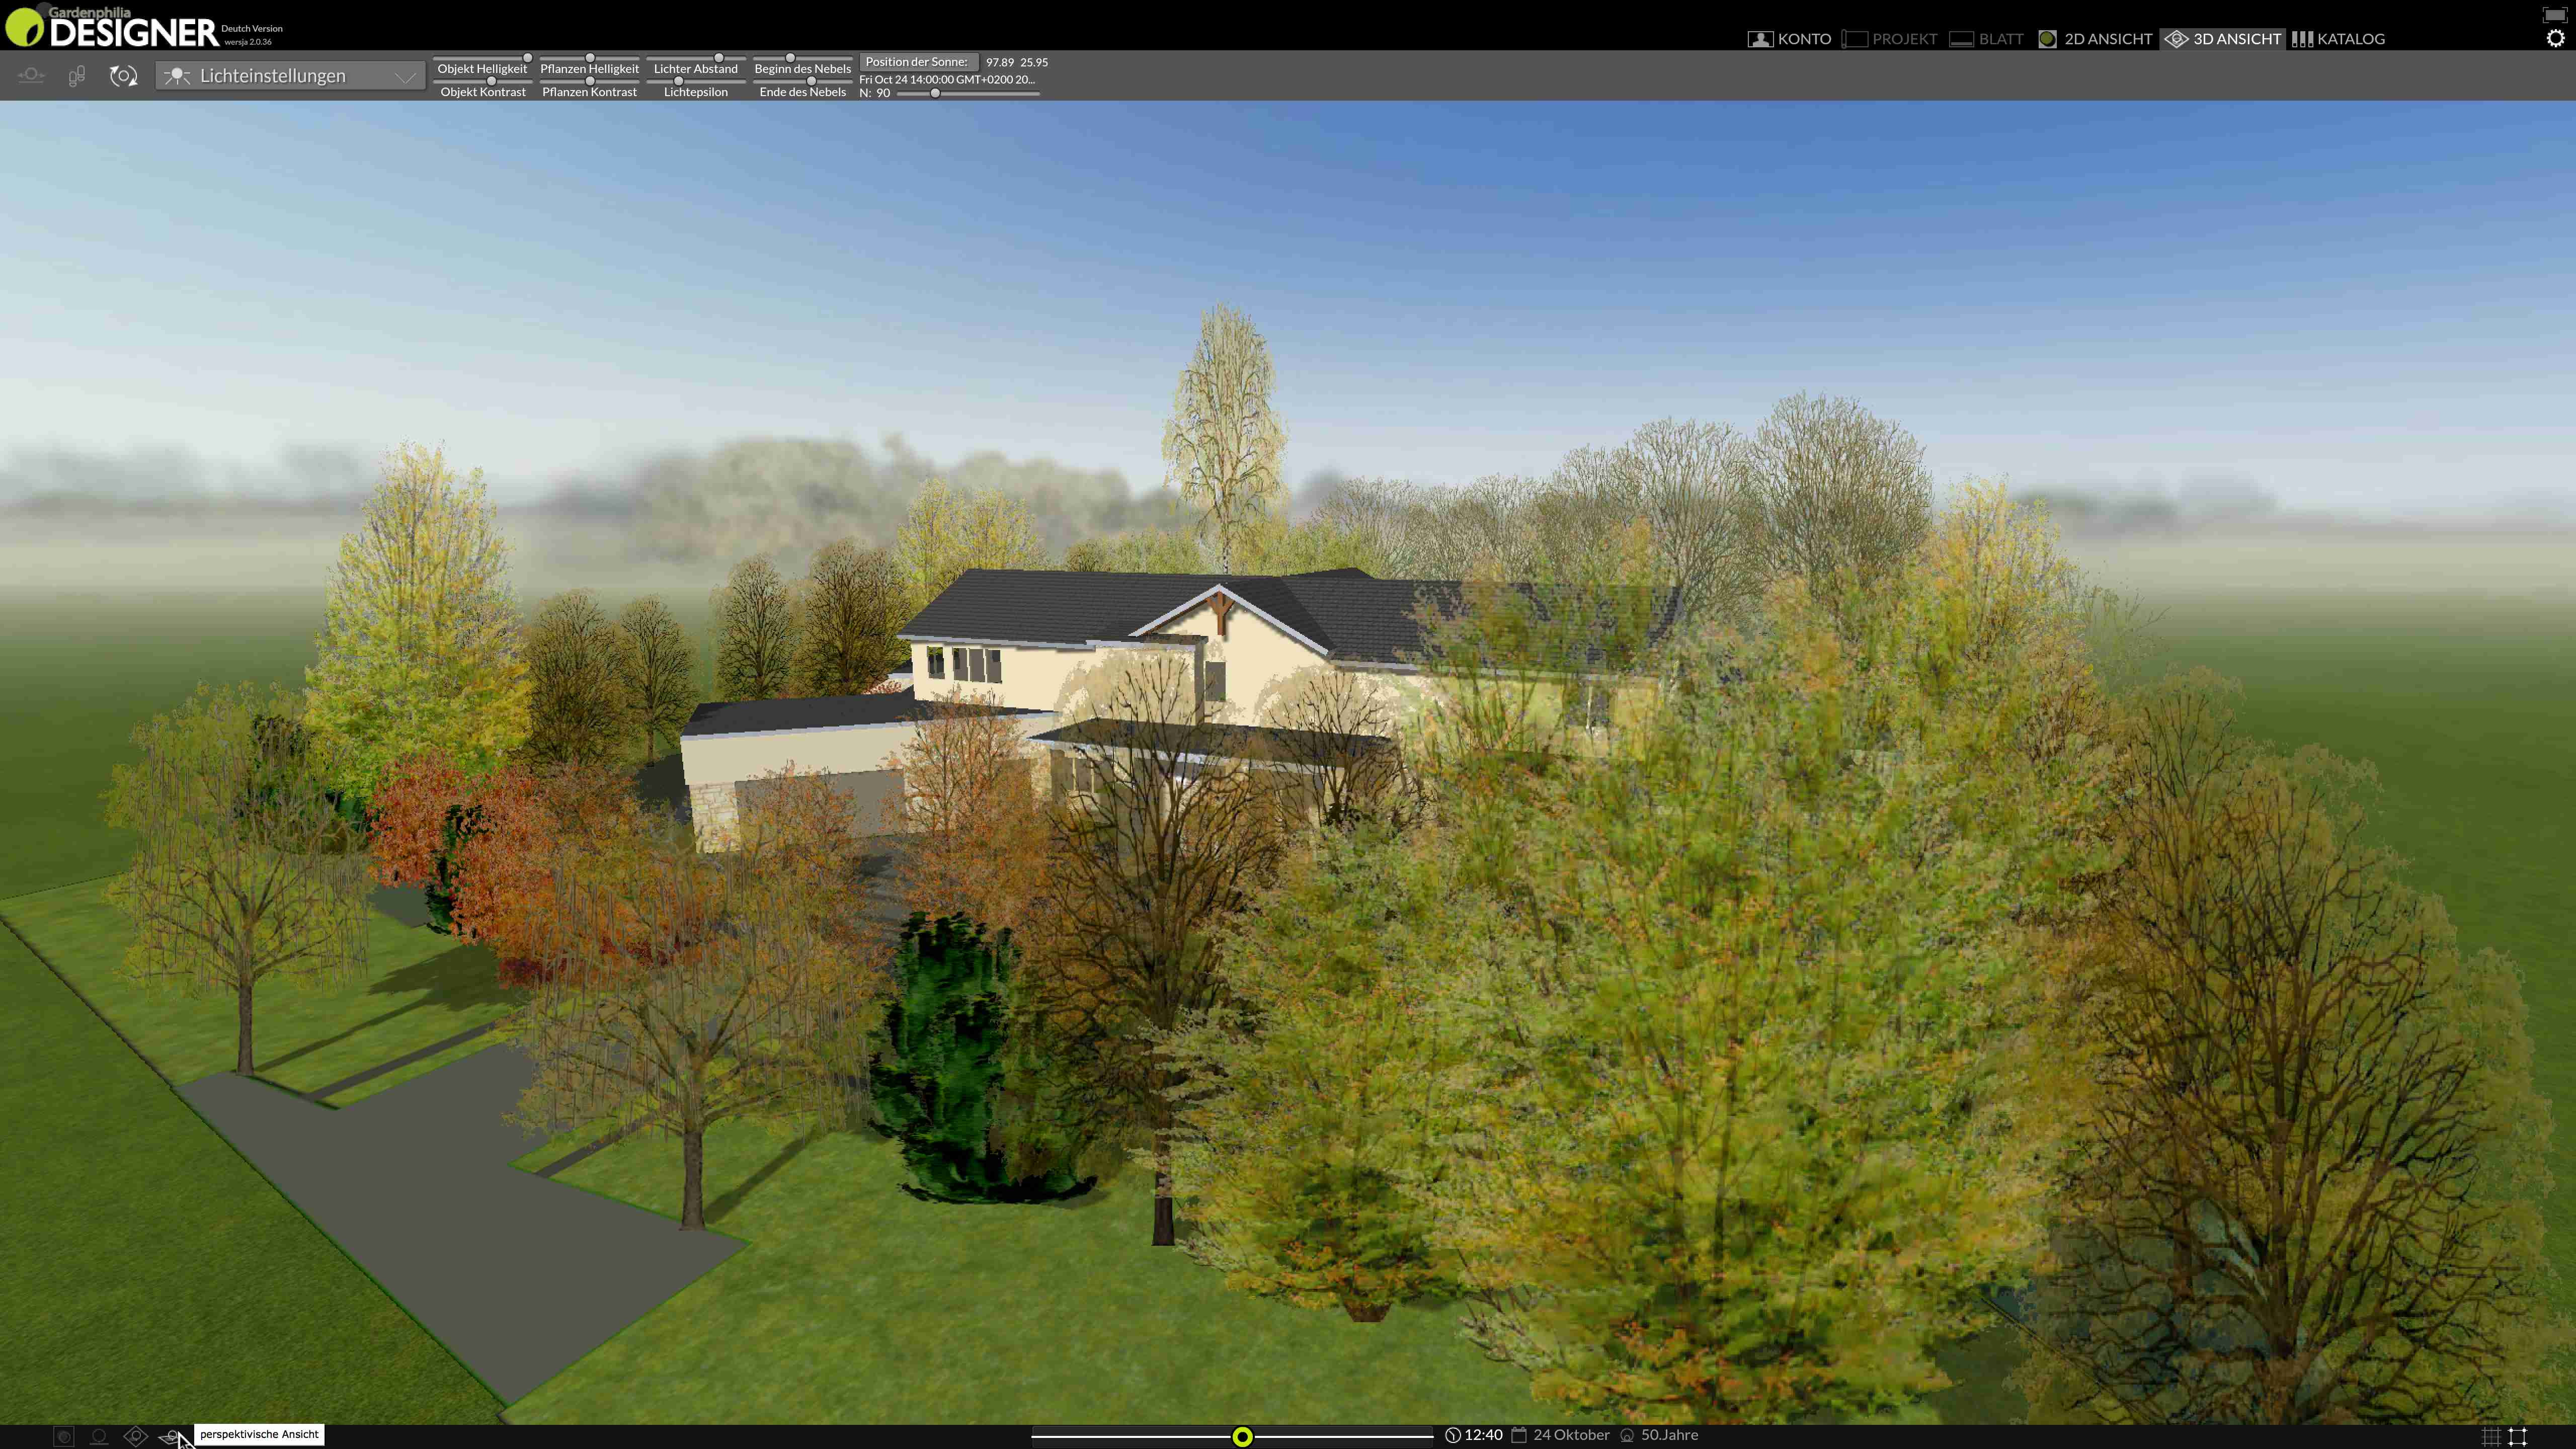 Gardenphilia DESIGNER professional software for garden and greenery 3D design